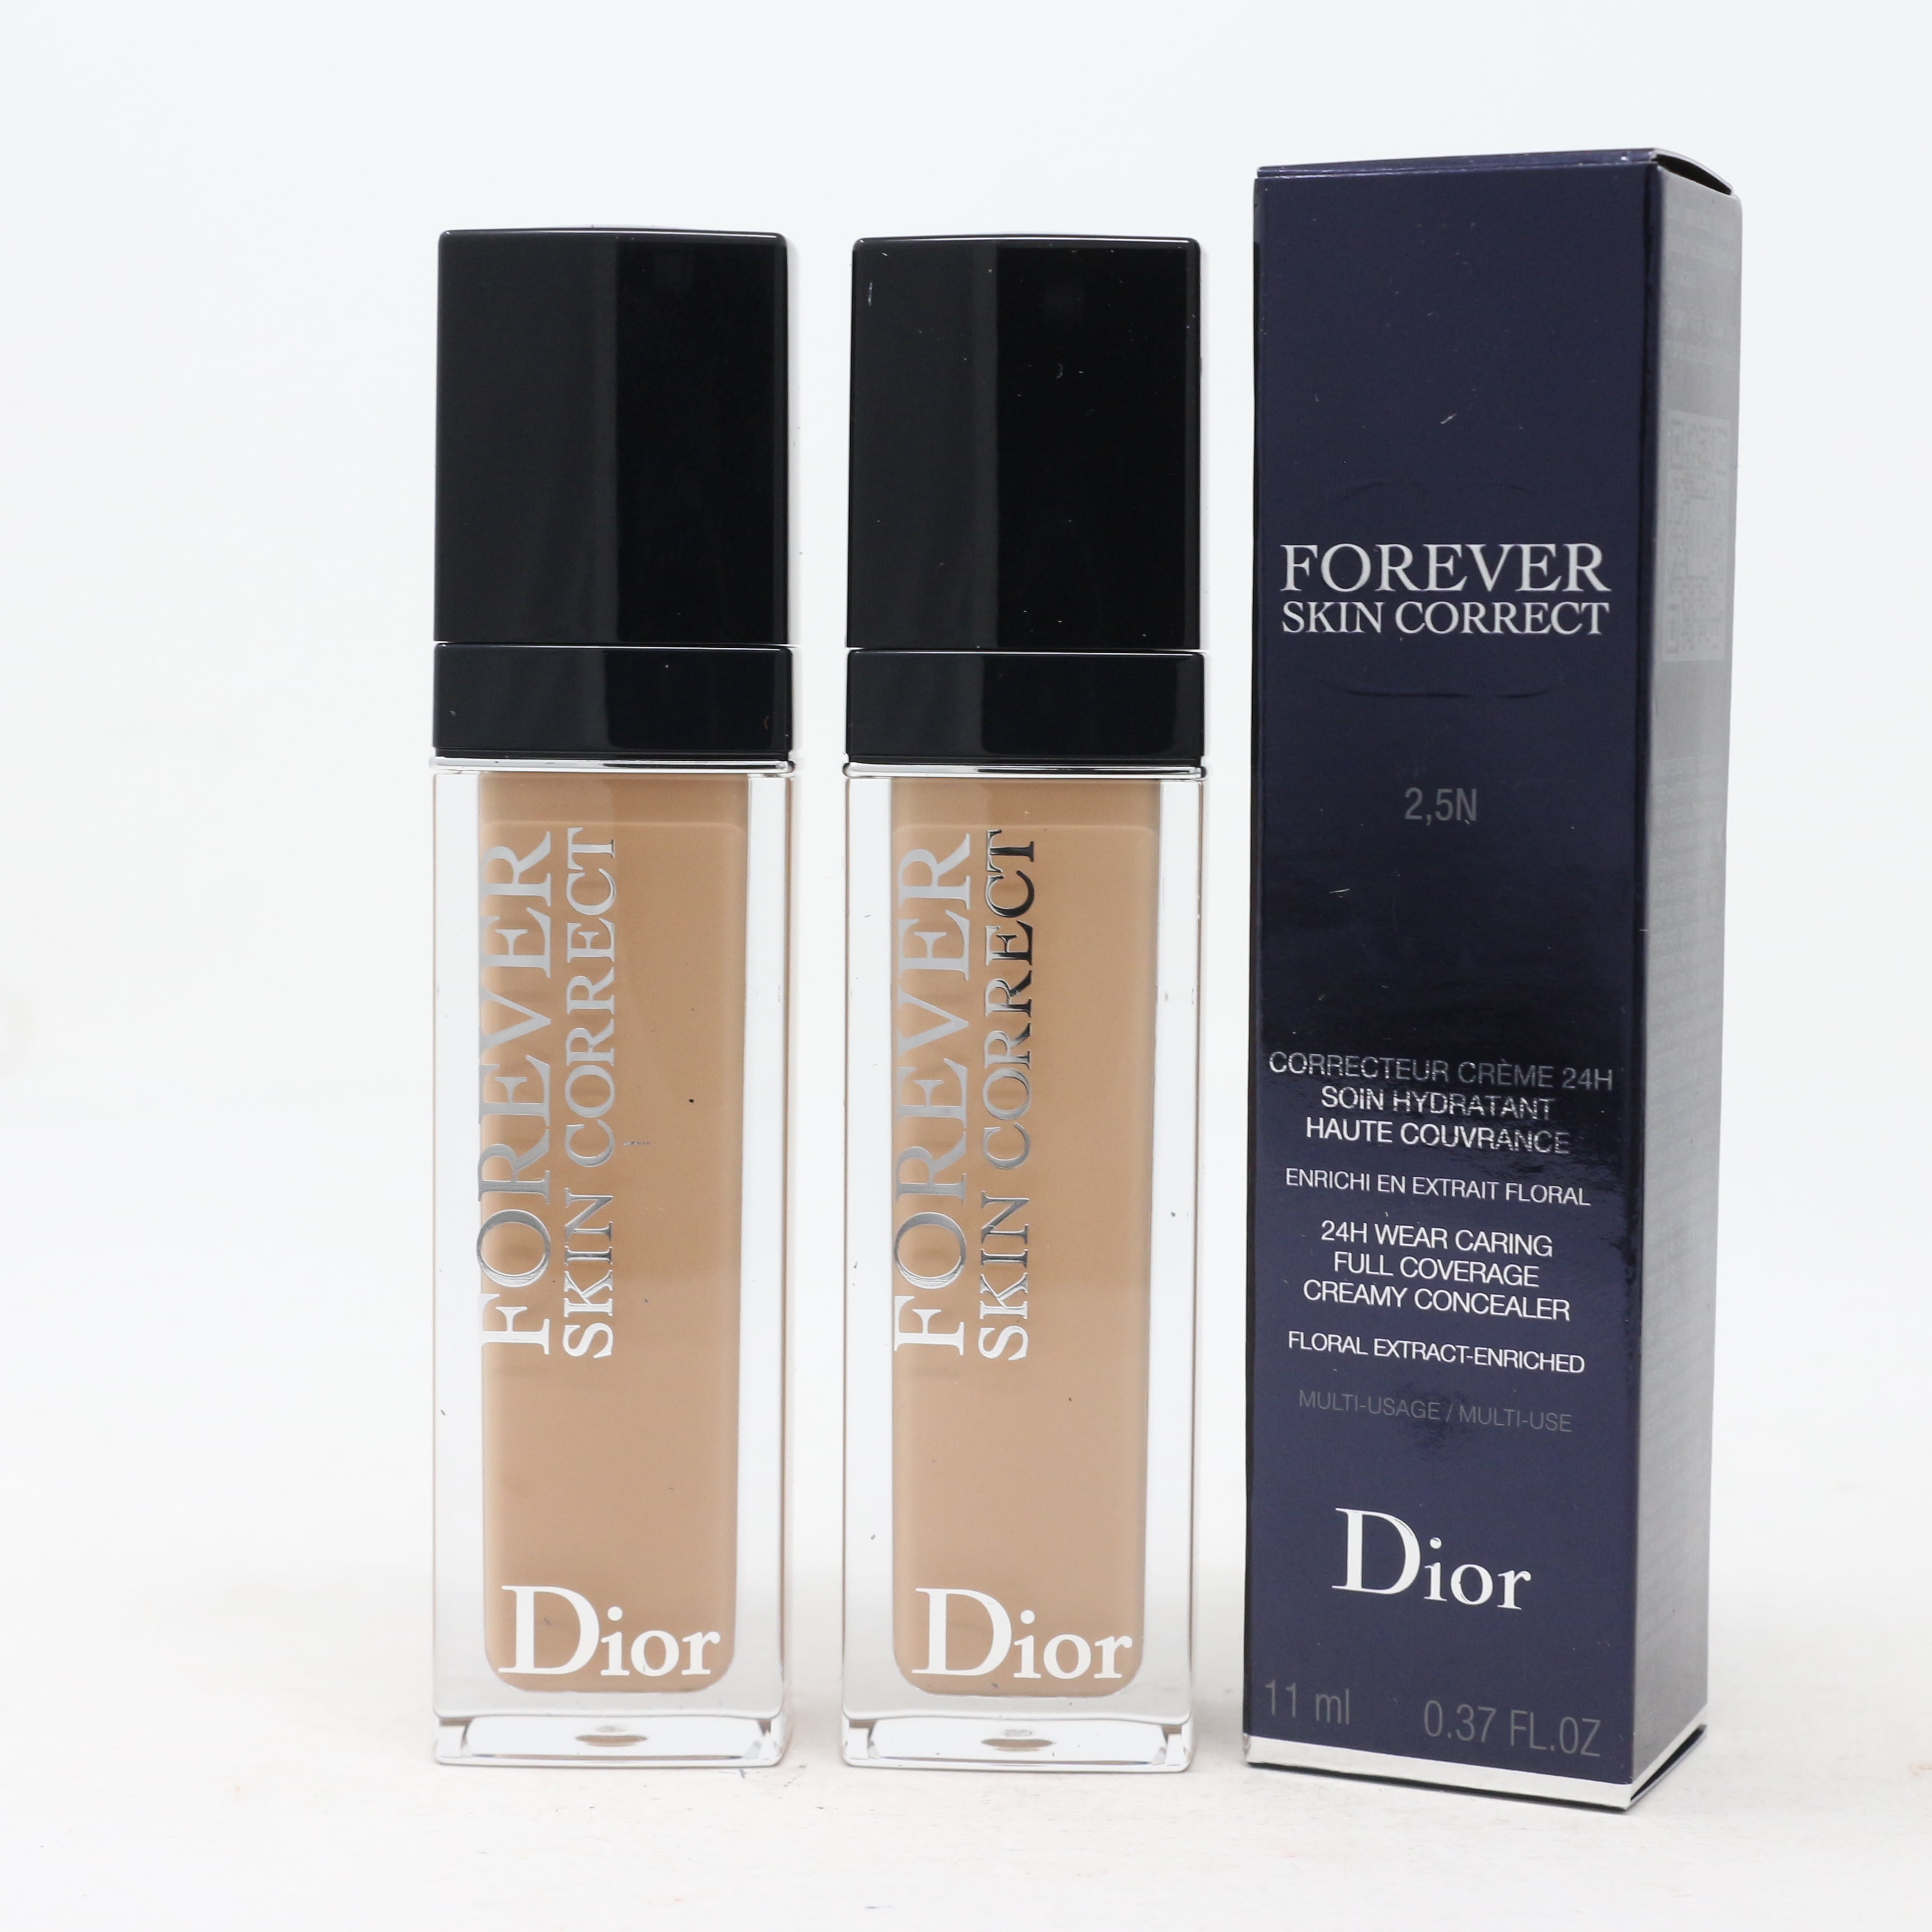 Dior Forever Skin Correct  1CR full coverage creamy concealer  eBay